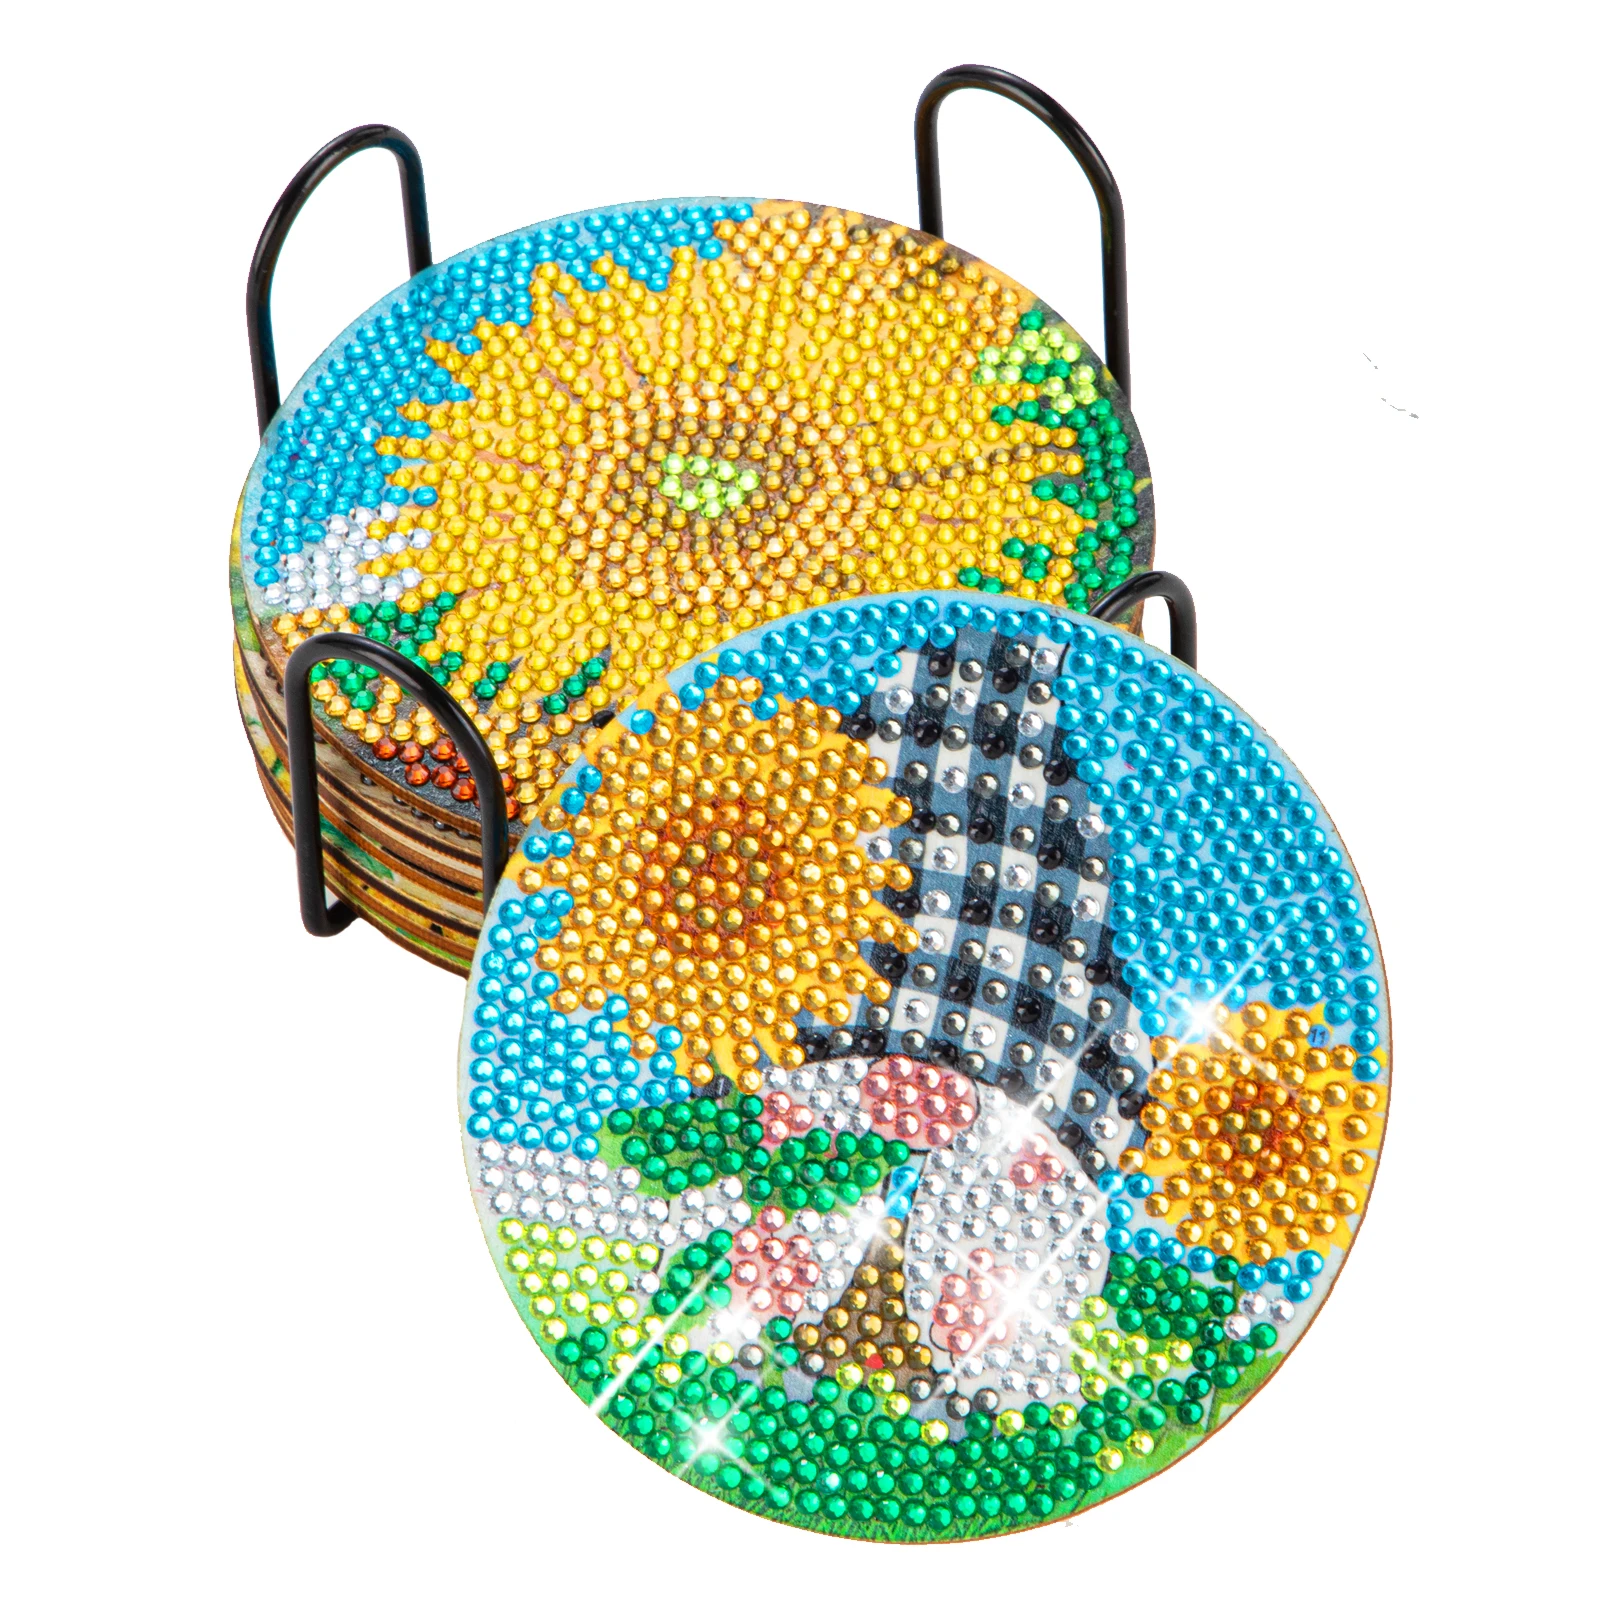 8pc/sets Diamond Painting Coasters Kits 5D Ocean Drinks DIY Coaster Diamond  Art Kits For Adults Kids Beginners - AliExpress